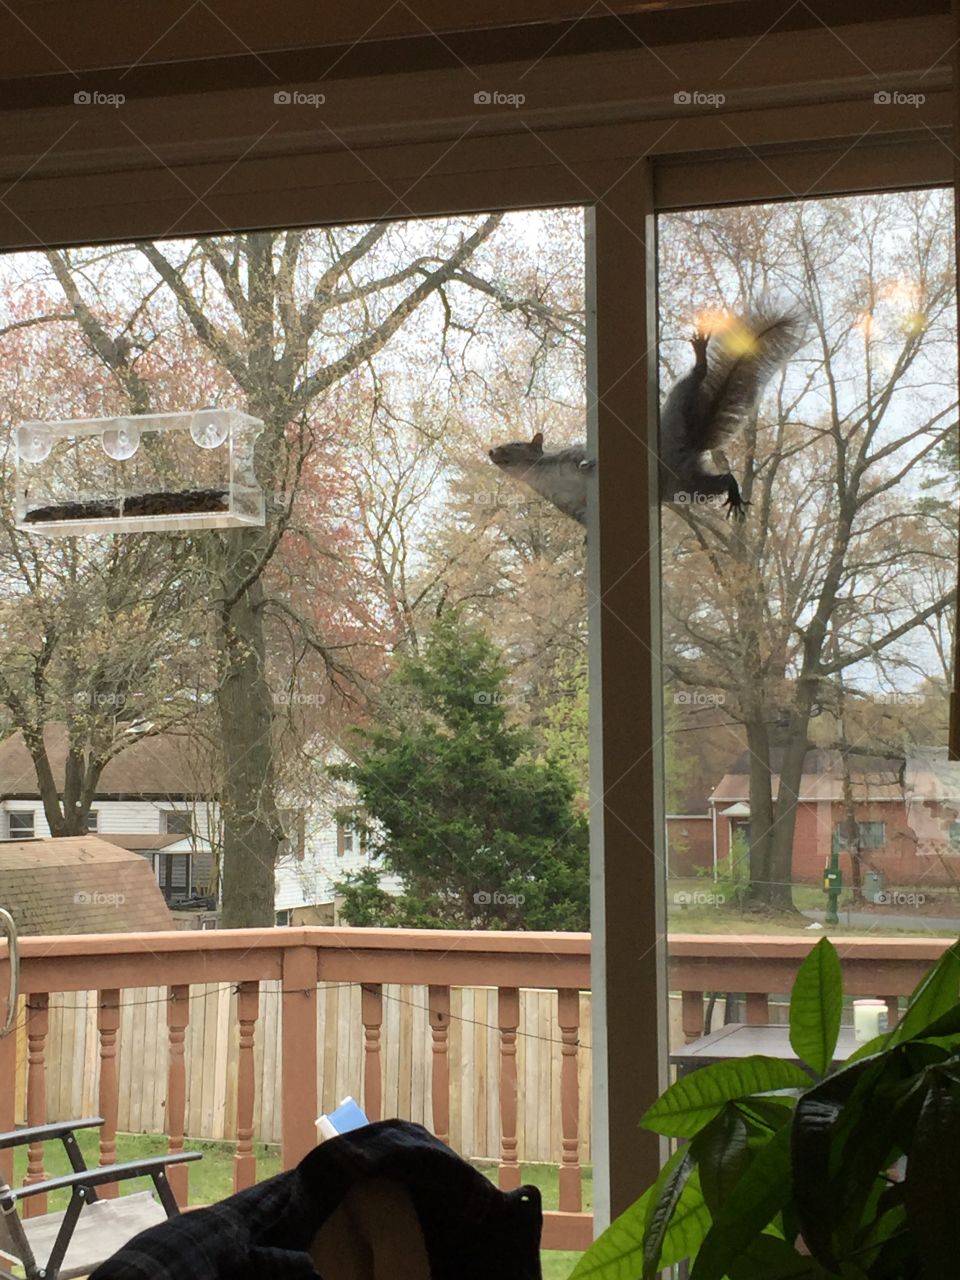 Squirrel hanging onto screen door and stretching to get bird feeder 